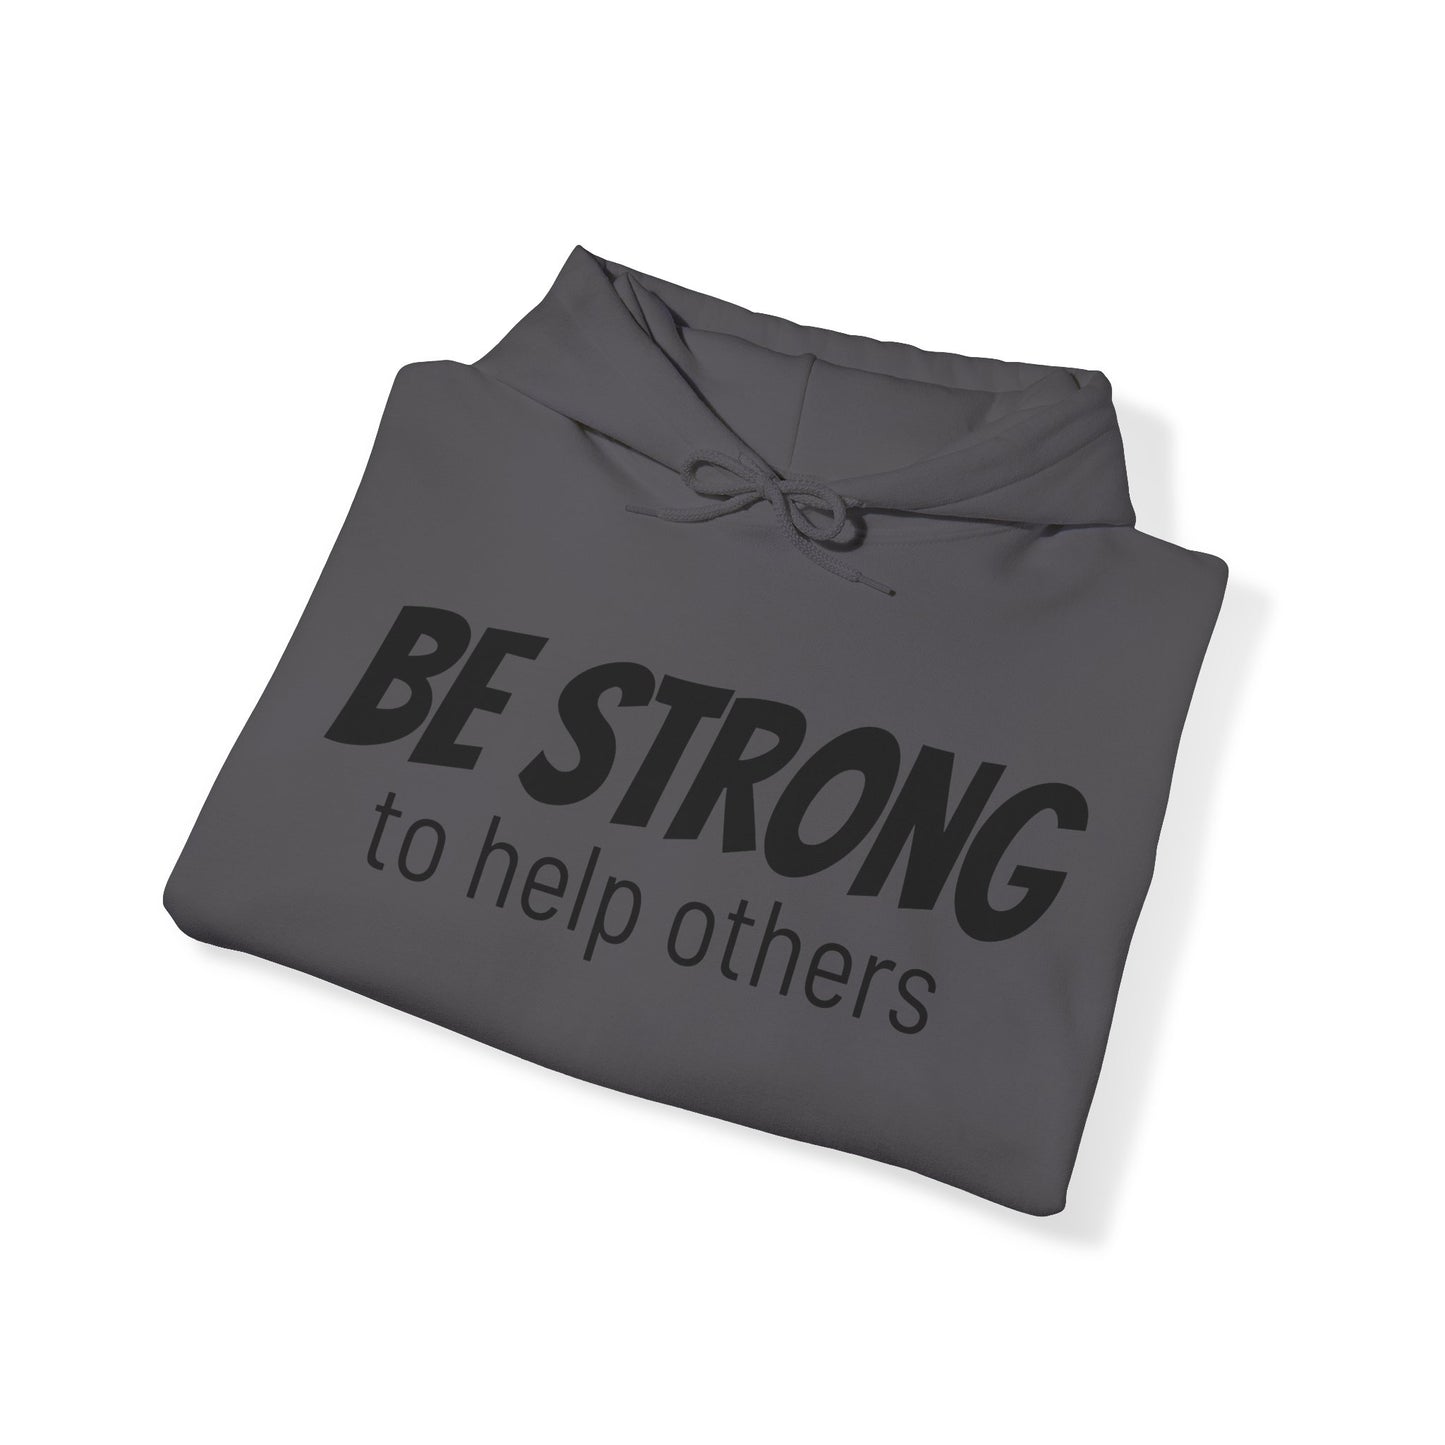 Be Strong - Unisex Heavy Blend™ Hooded Sweatshirt